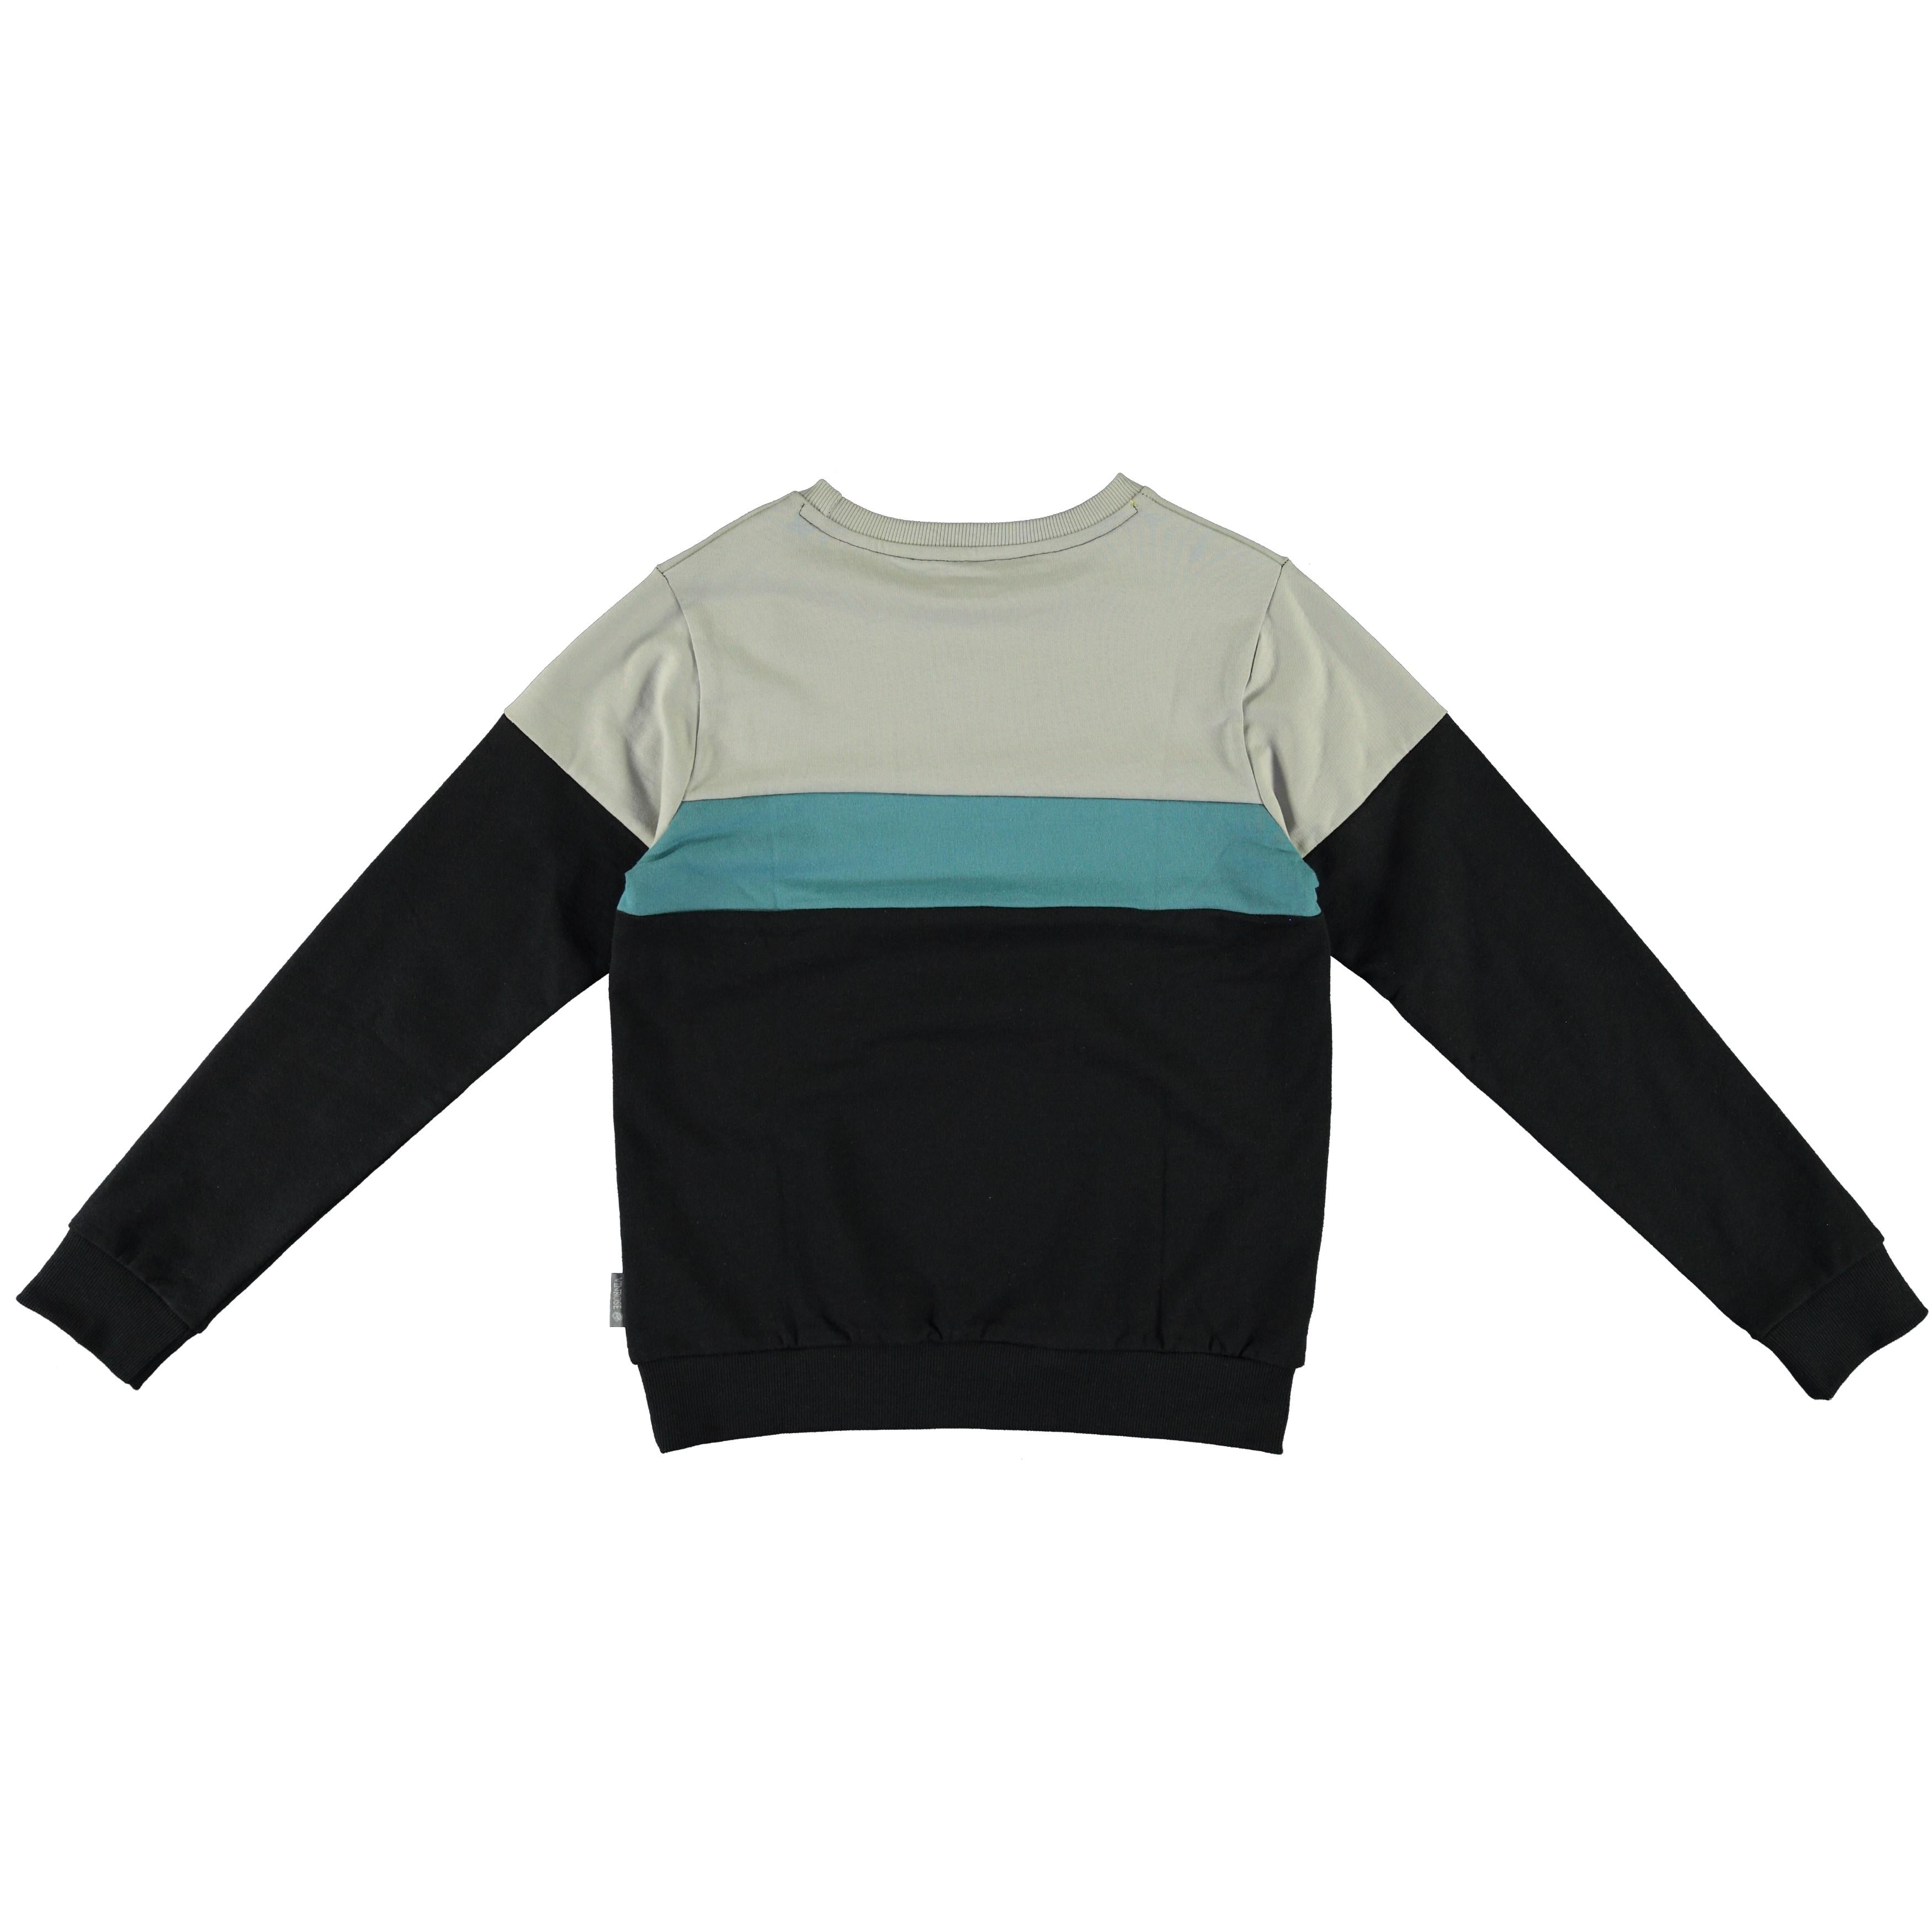 Sweater Vinrose